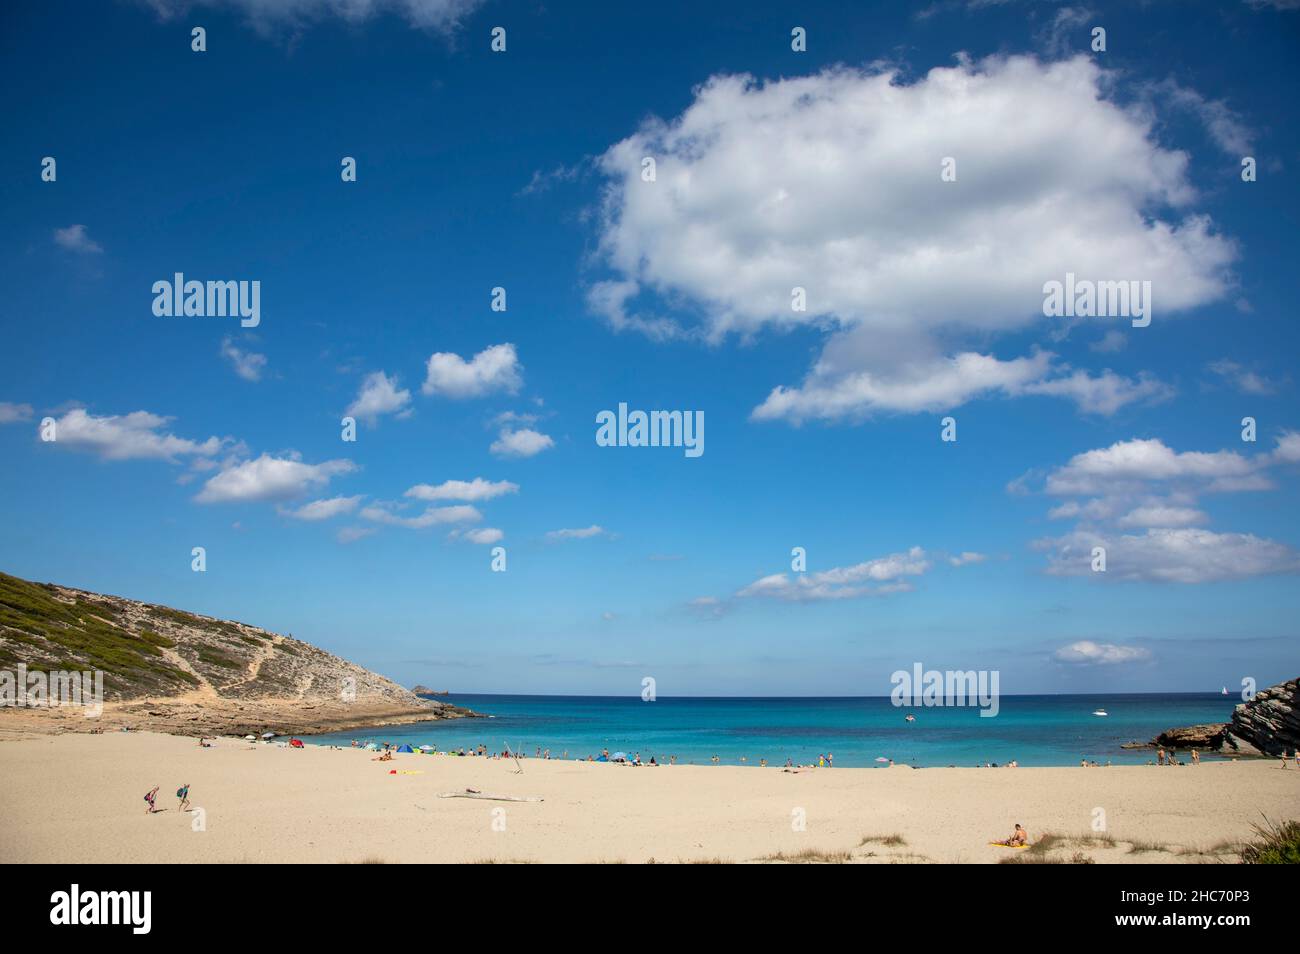 Balearic Islands, Balears, Bay, Beach, Cala Torta, Europe, Holiday, landscape, Leisure, Majorca, Mallorca, Mediterranean, Nature, Spain, Tourism, Trav Stock Photo